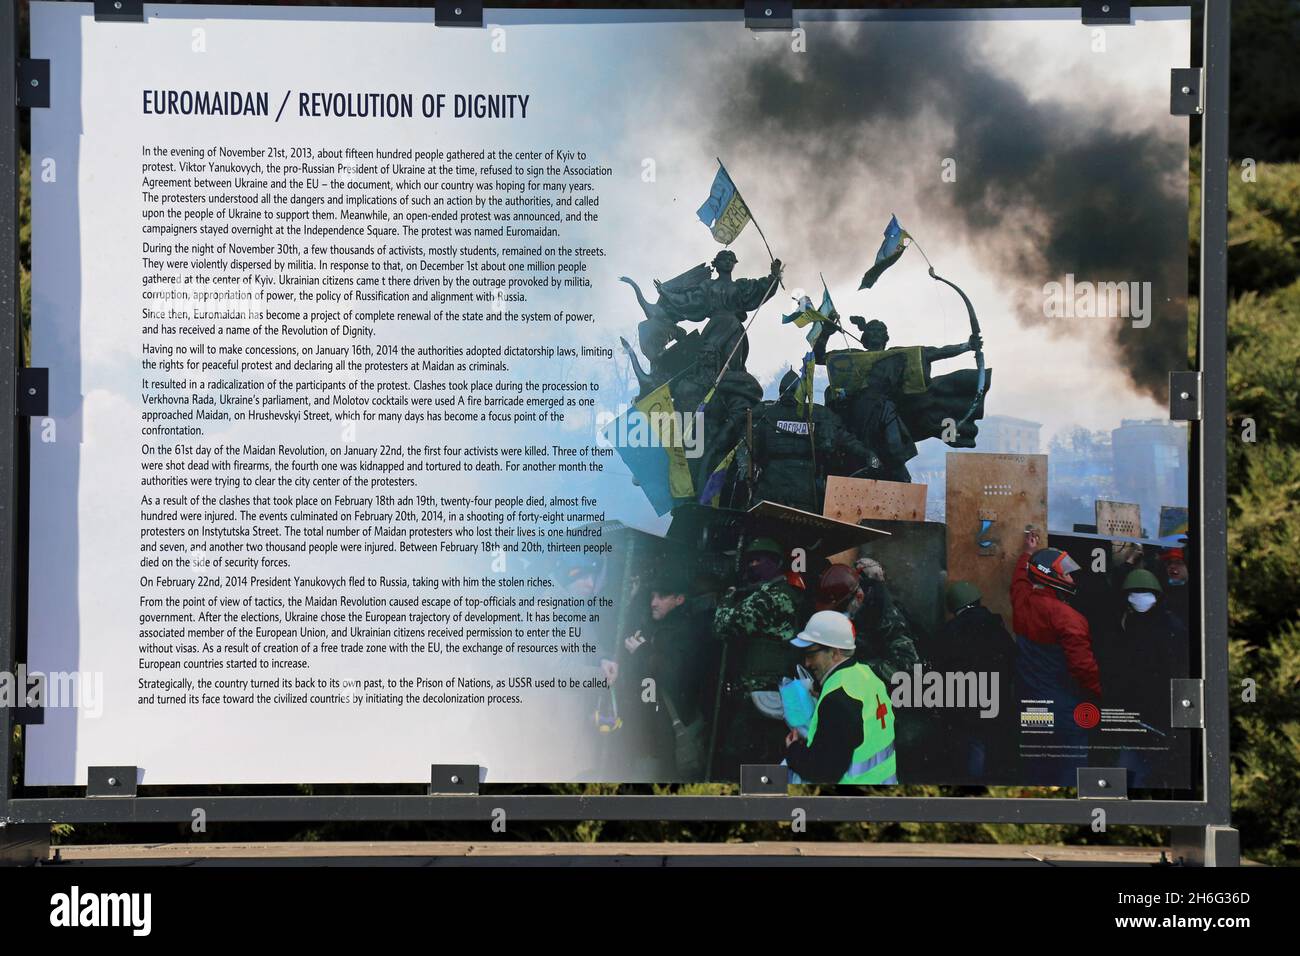 Euromaidan-Informationstafeln im ukrainischen Haus in Kiew Stockfoto